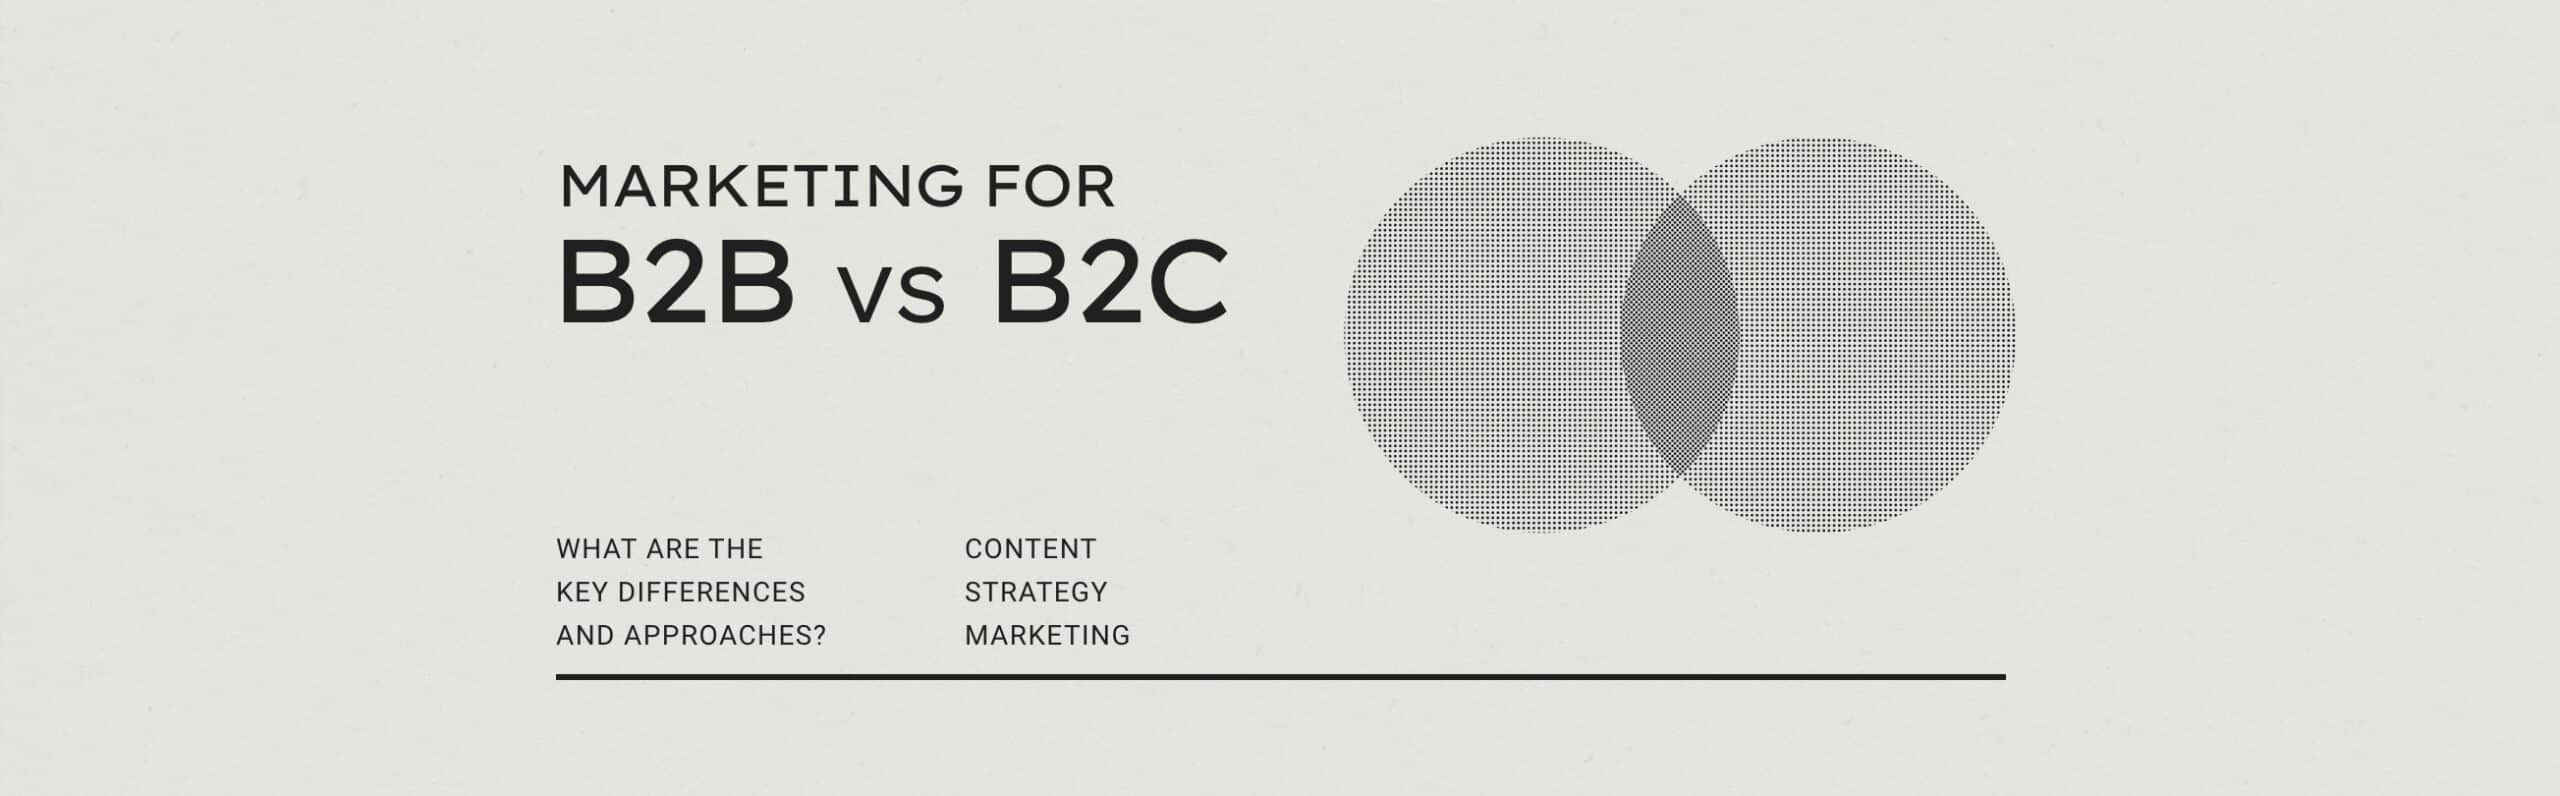 Marketing for B2B vs. B2C - Astute Communications